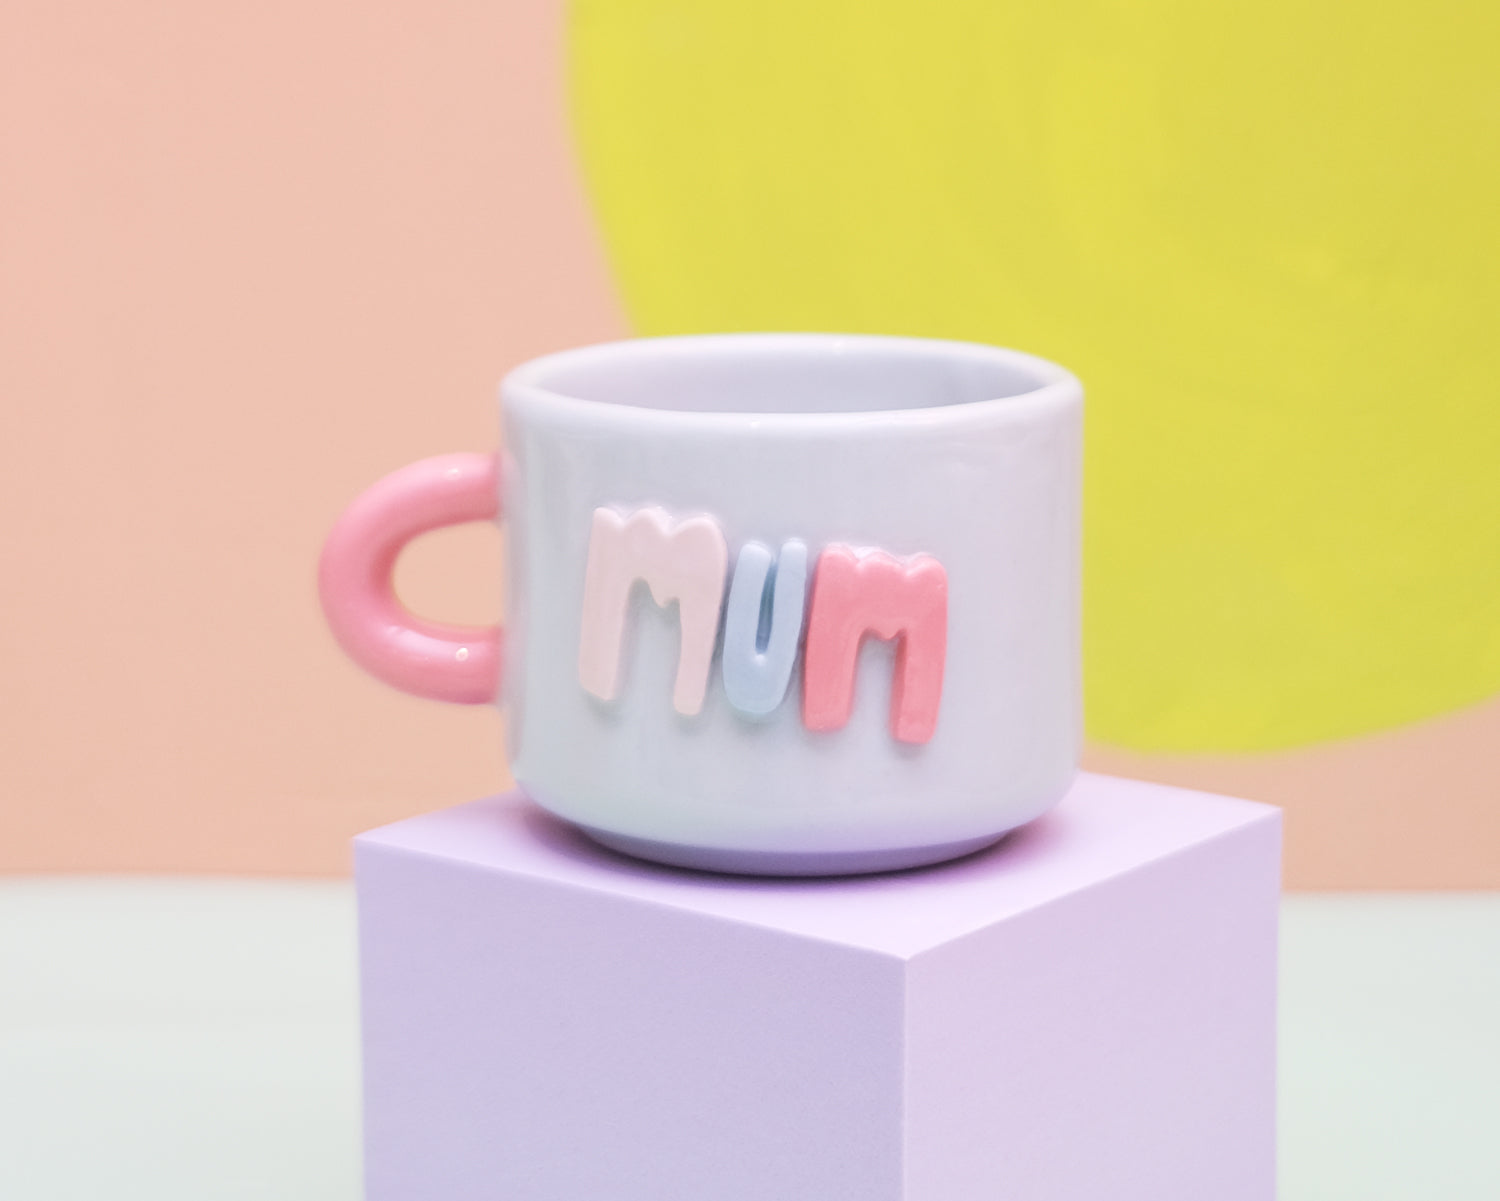 Mum - Teacup mug